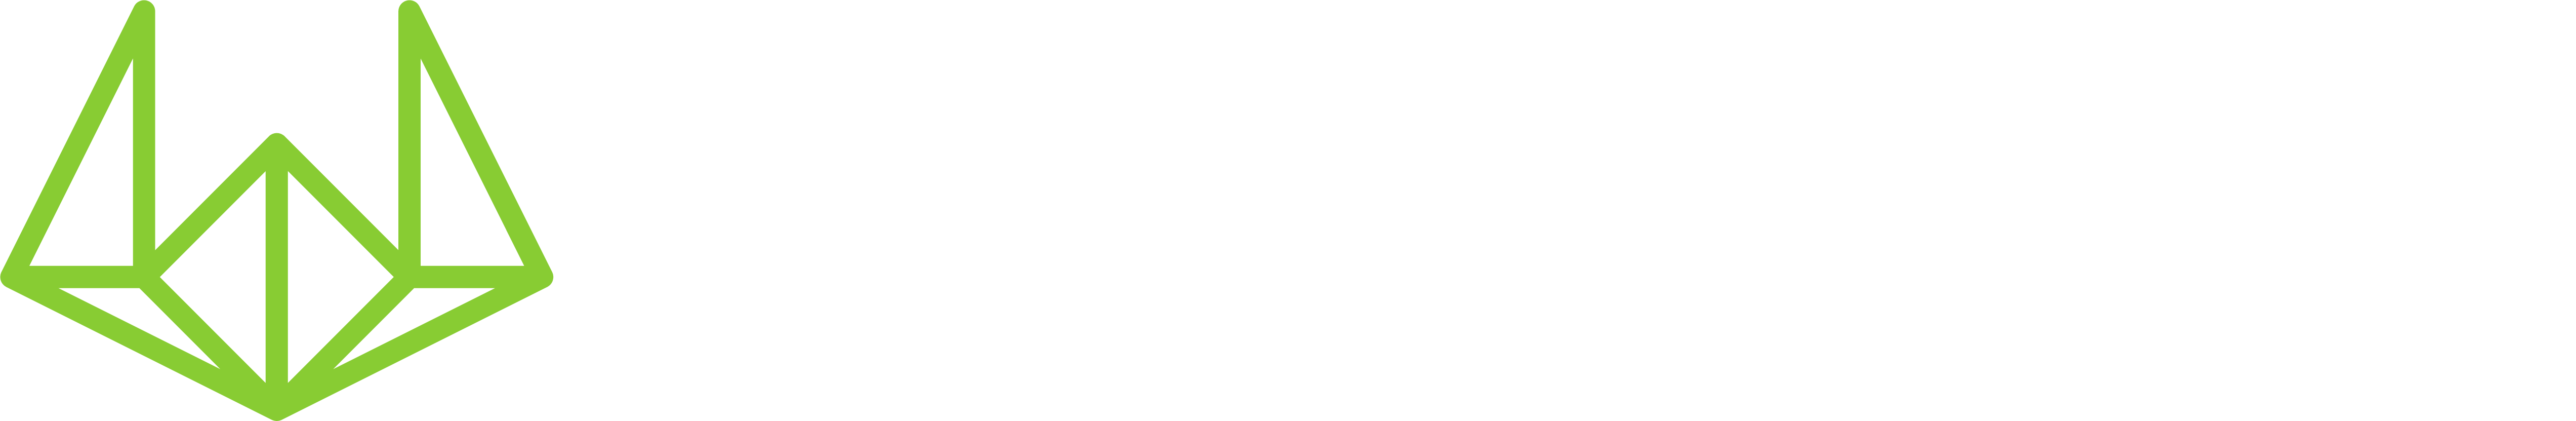 Wintermute logo